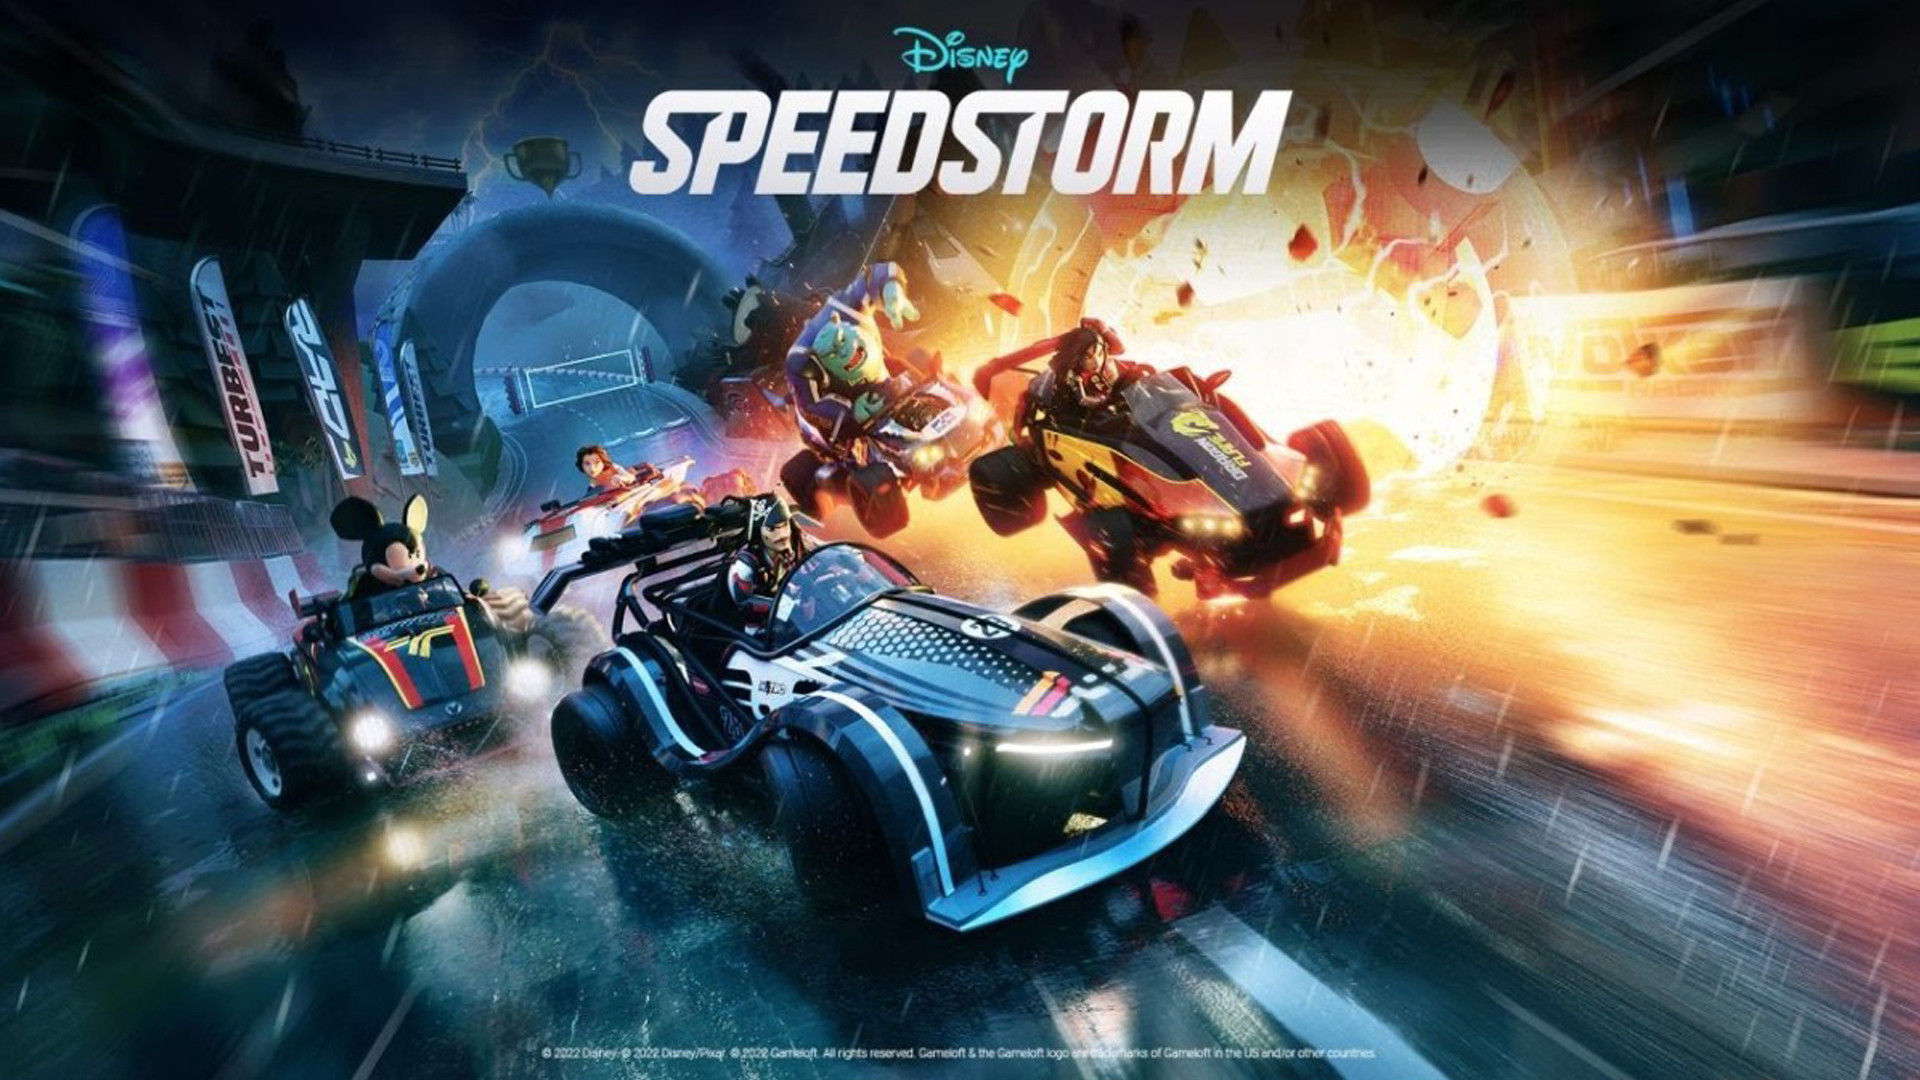 Disney Speedstorm date de sortie, quand sort le jeu ?